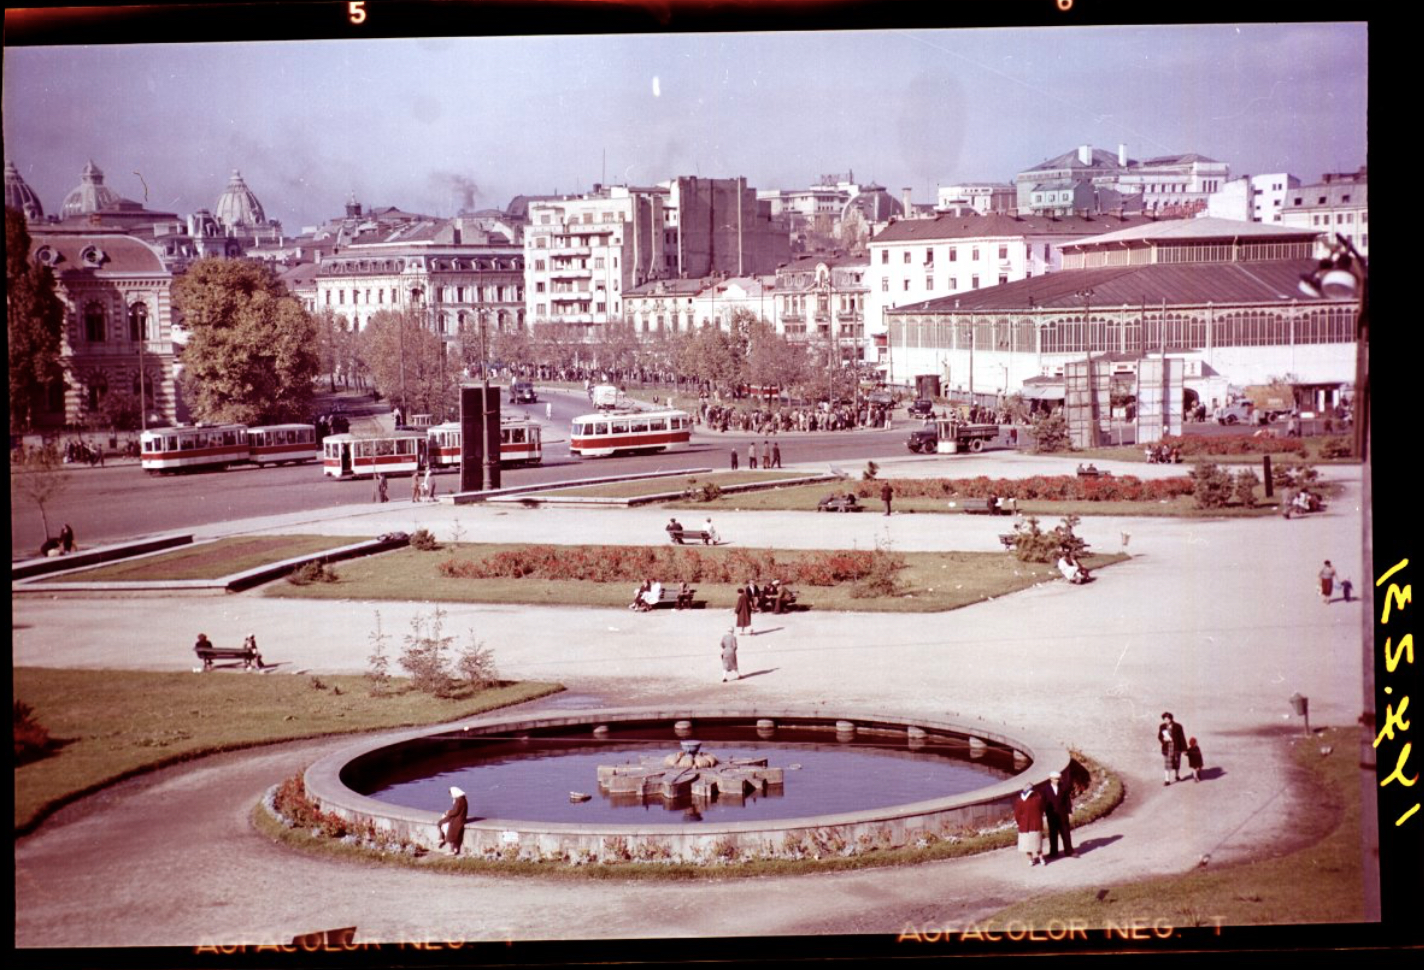 Piața Unirii in Bucharest 1950-60